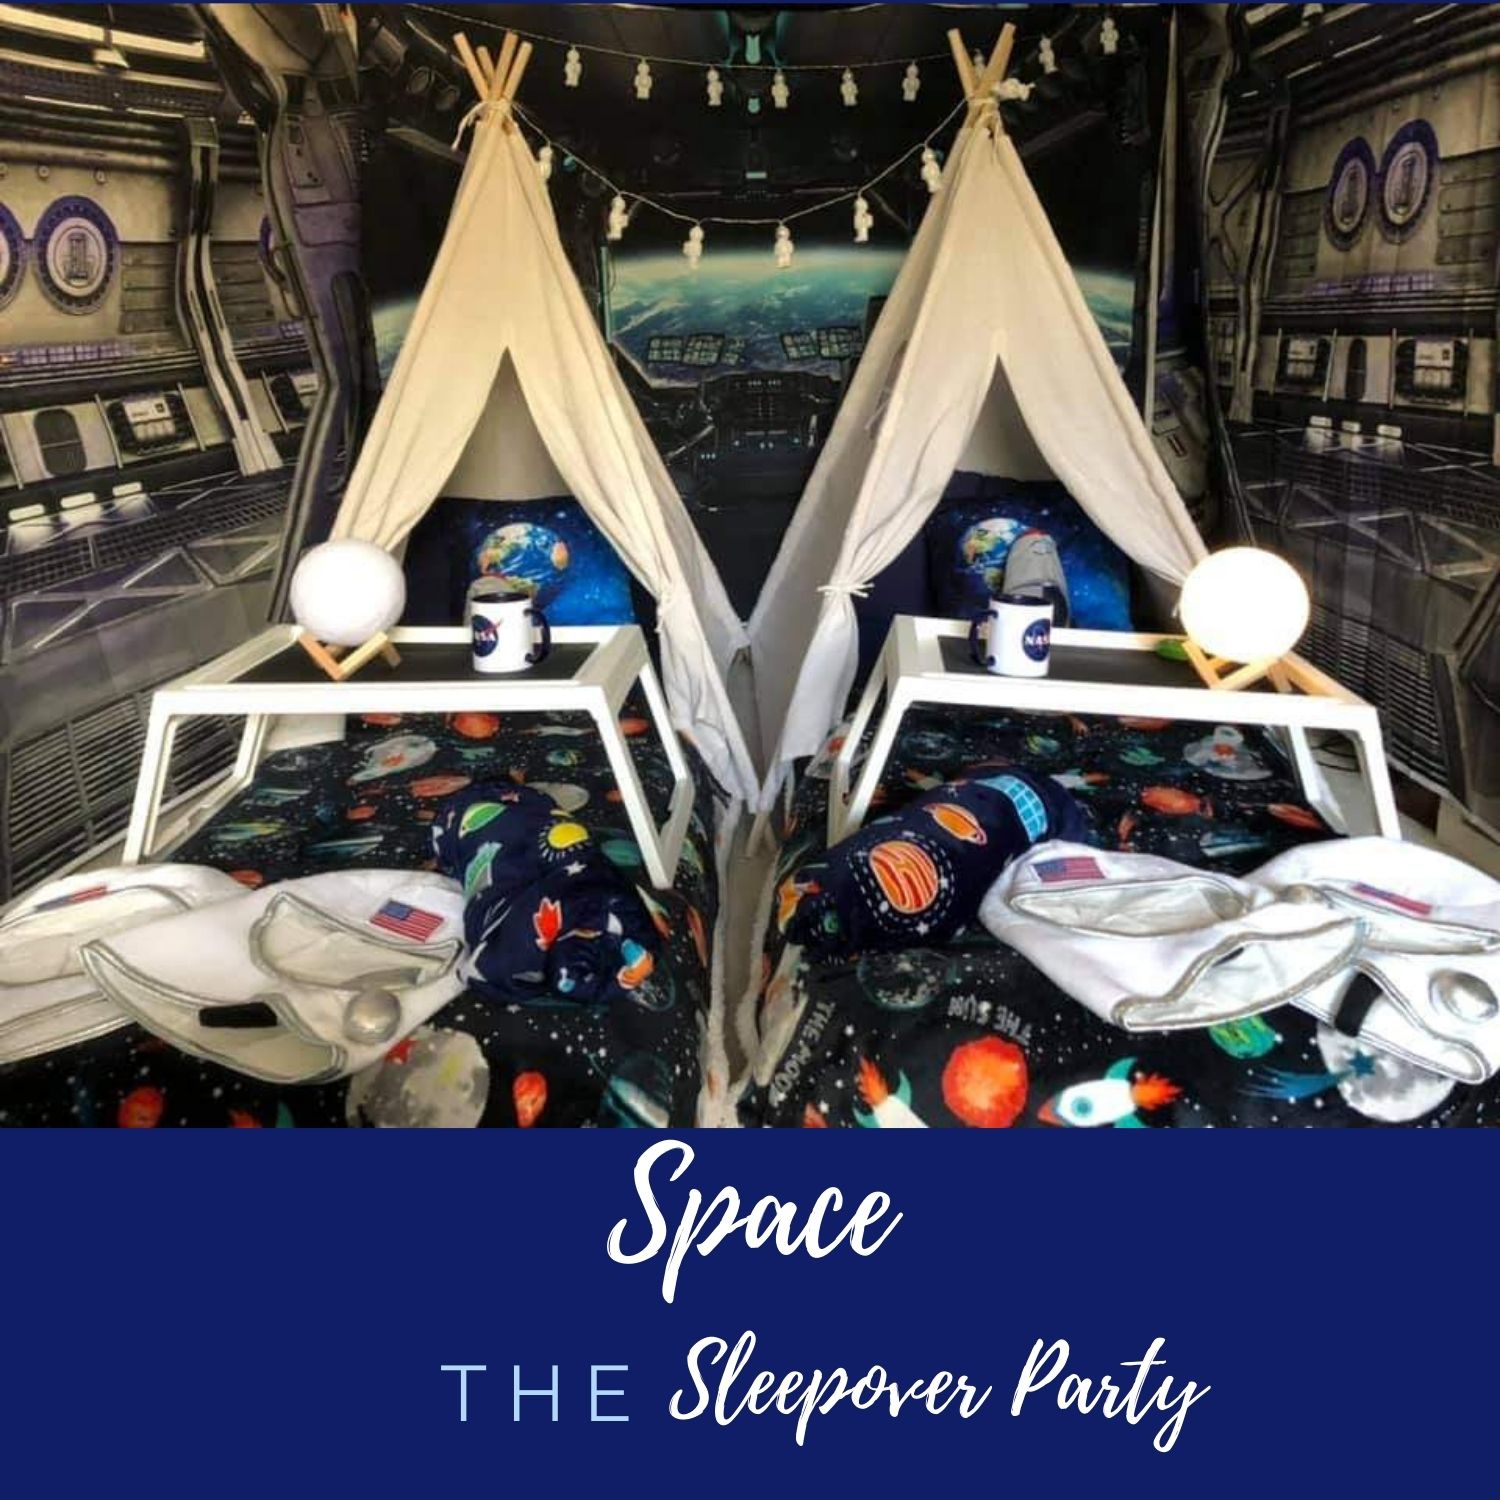 Space sleepover party